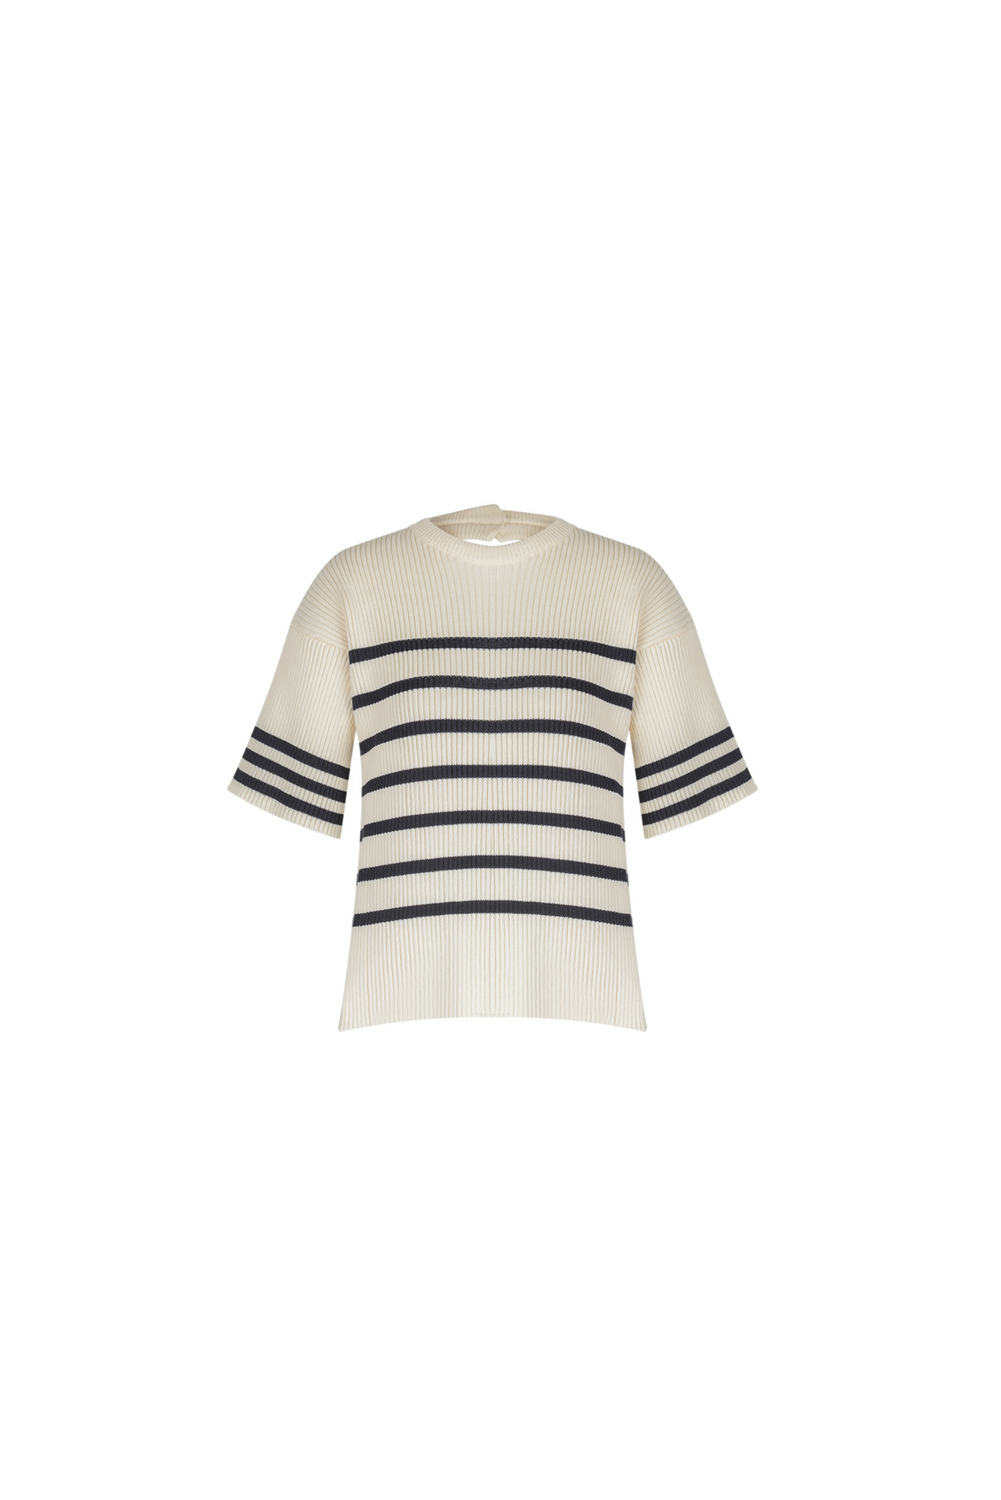 Clichet Shirt Seafarer